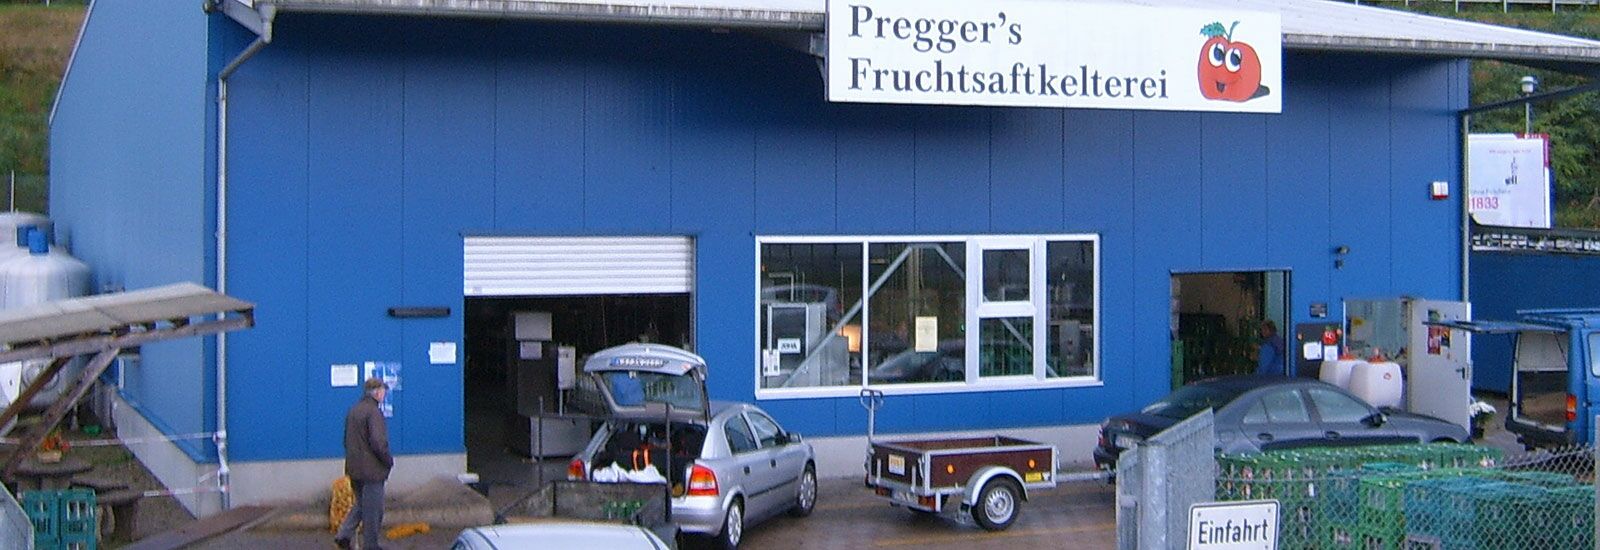 Pregger's Fruchtsaftkelterei ium Murgtal Gaggenau / Ottenau